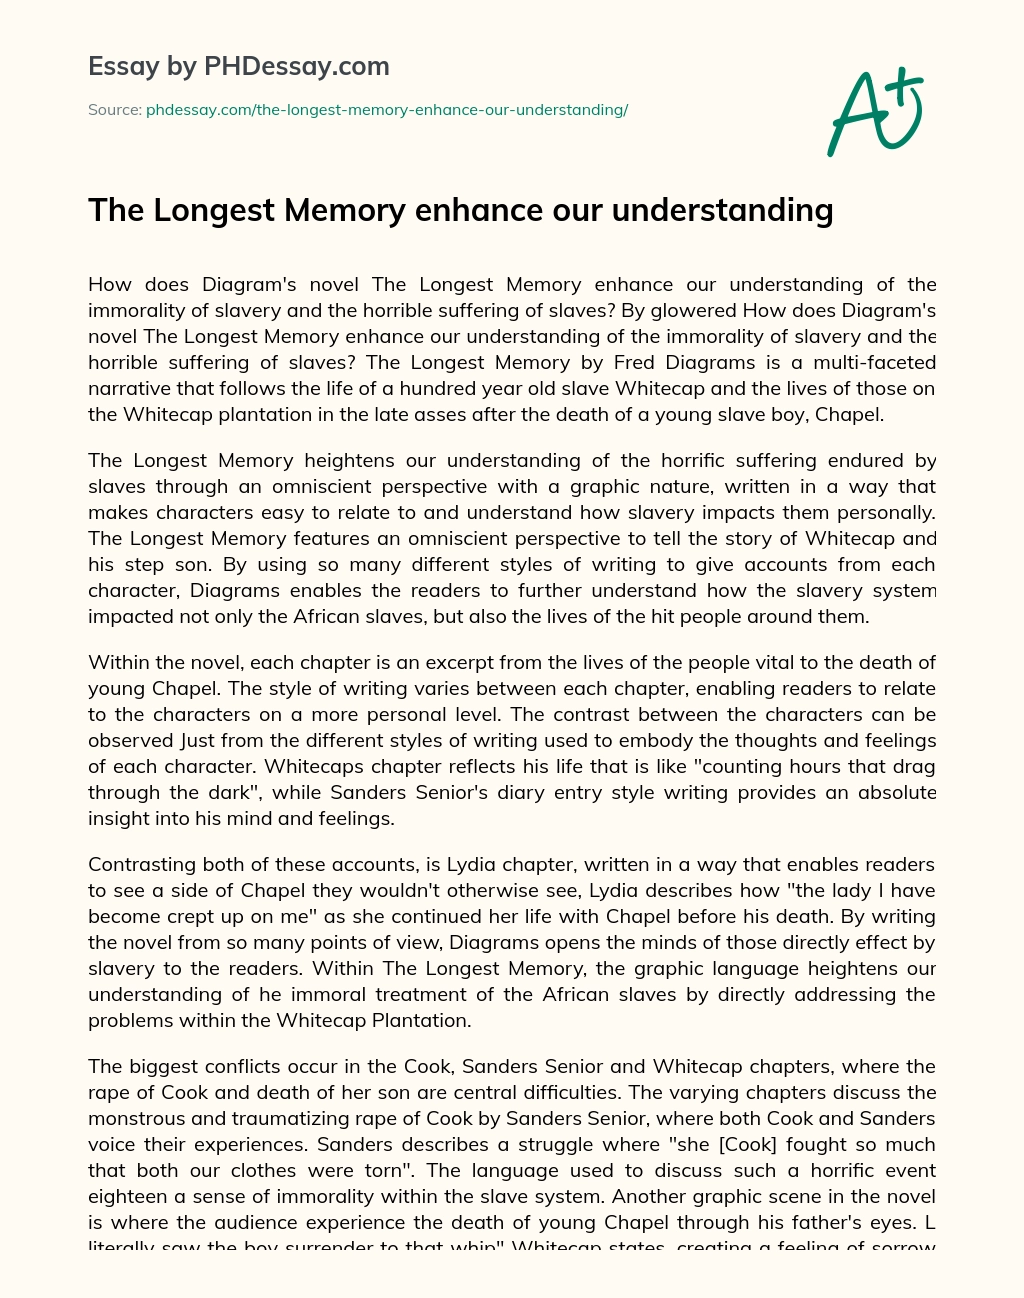 The Longest Memory enhance our understanding essay